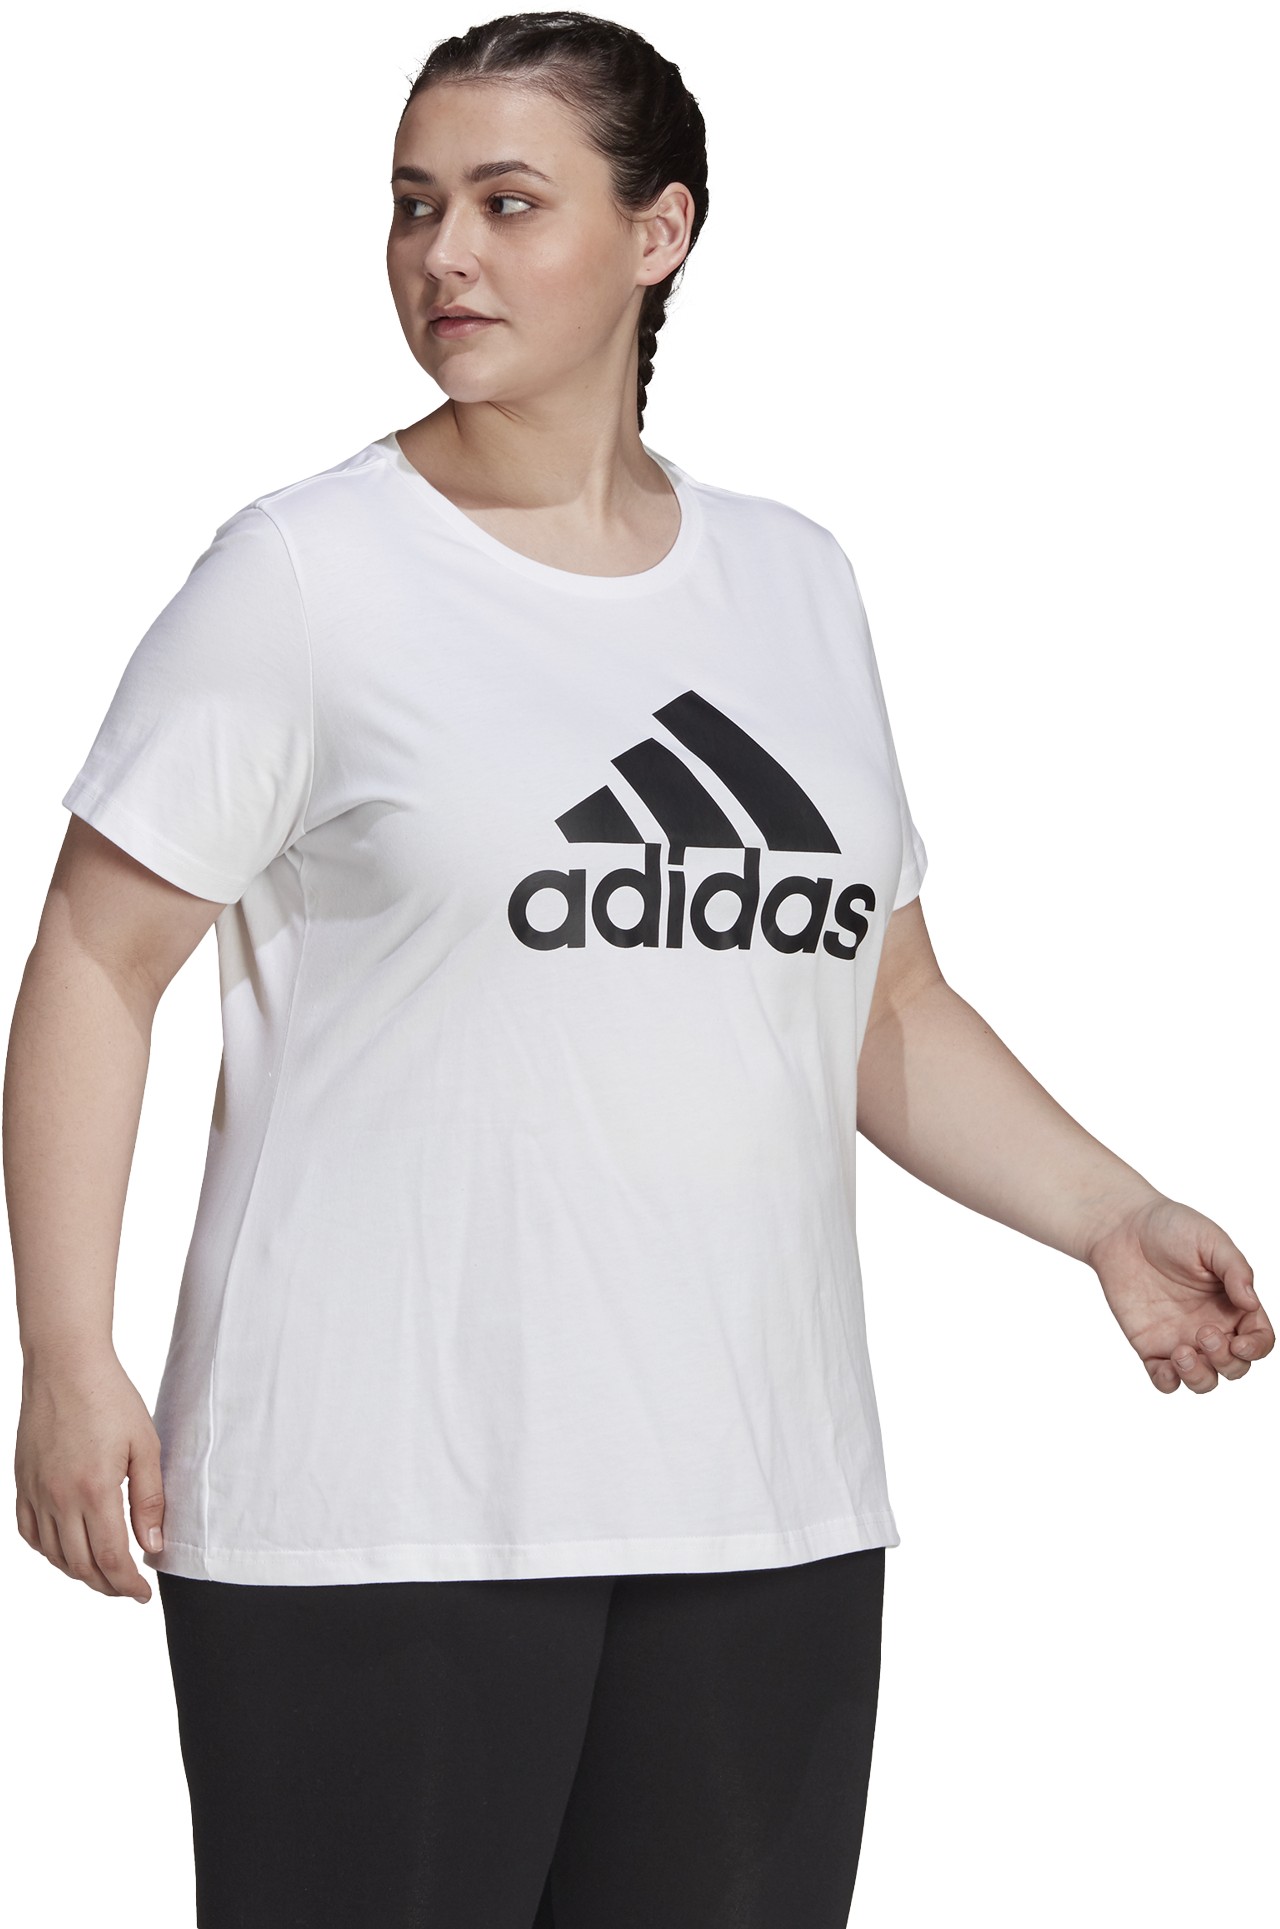 Women’s plus size T-shirt